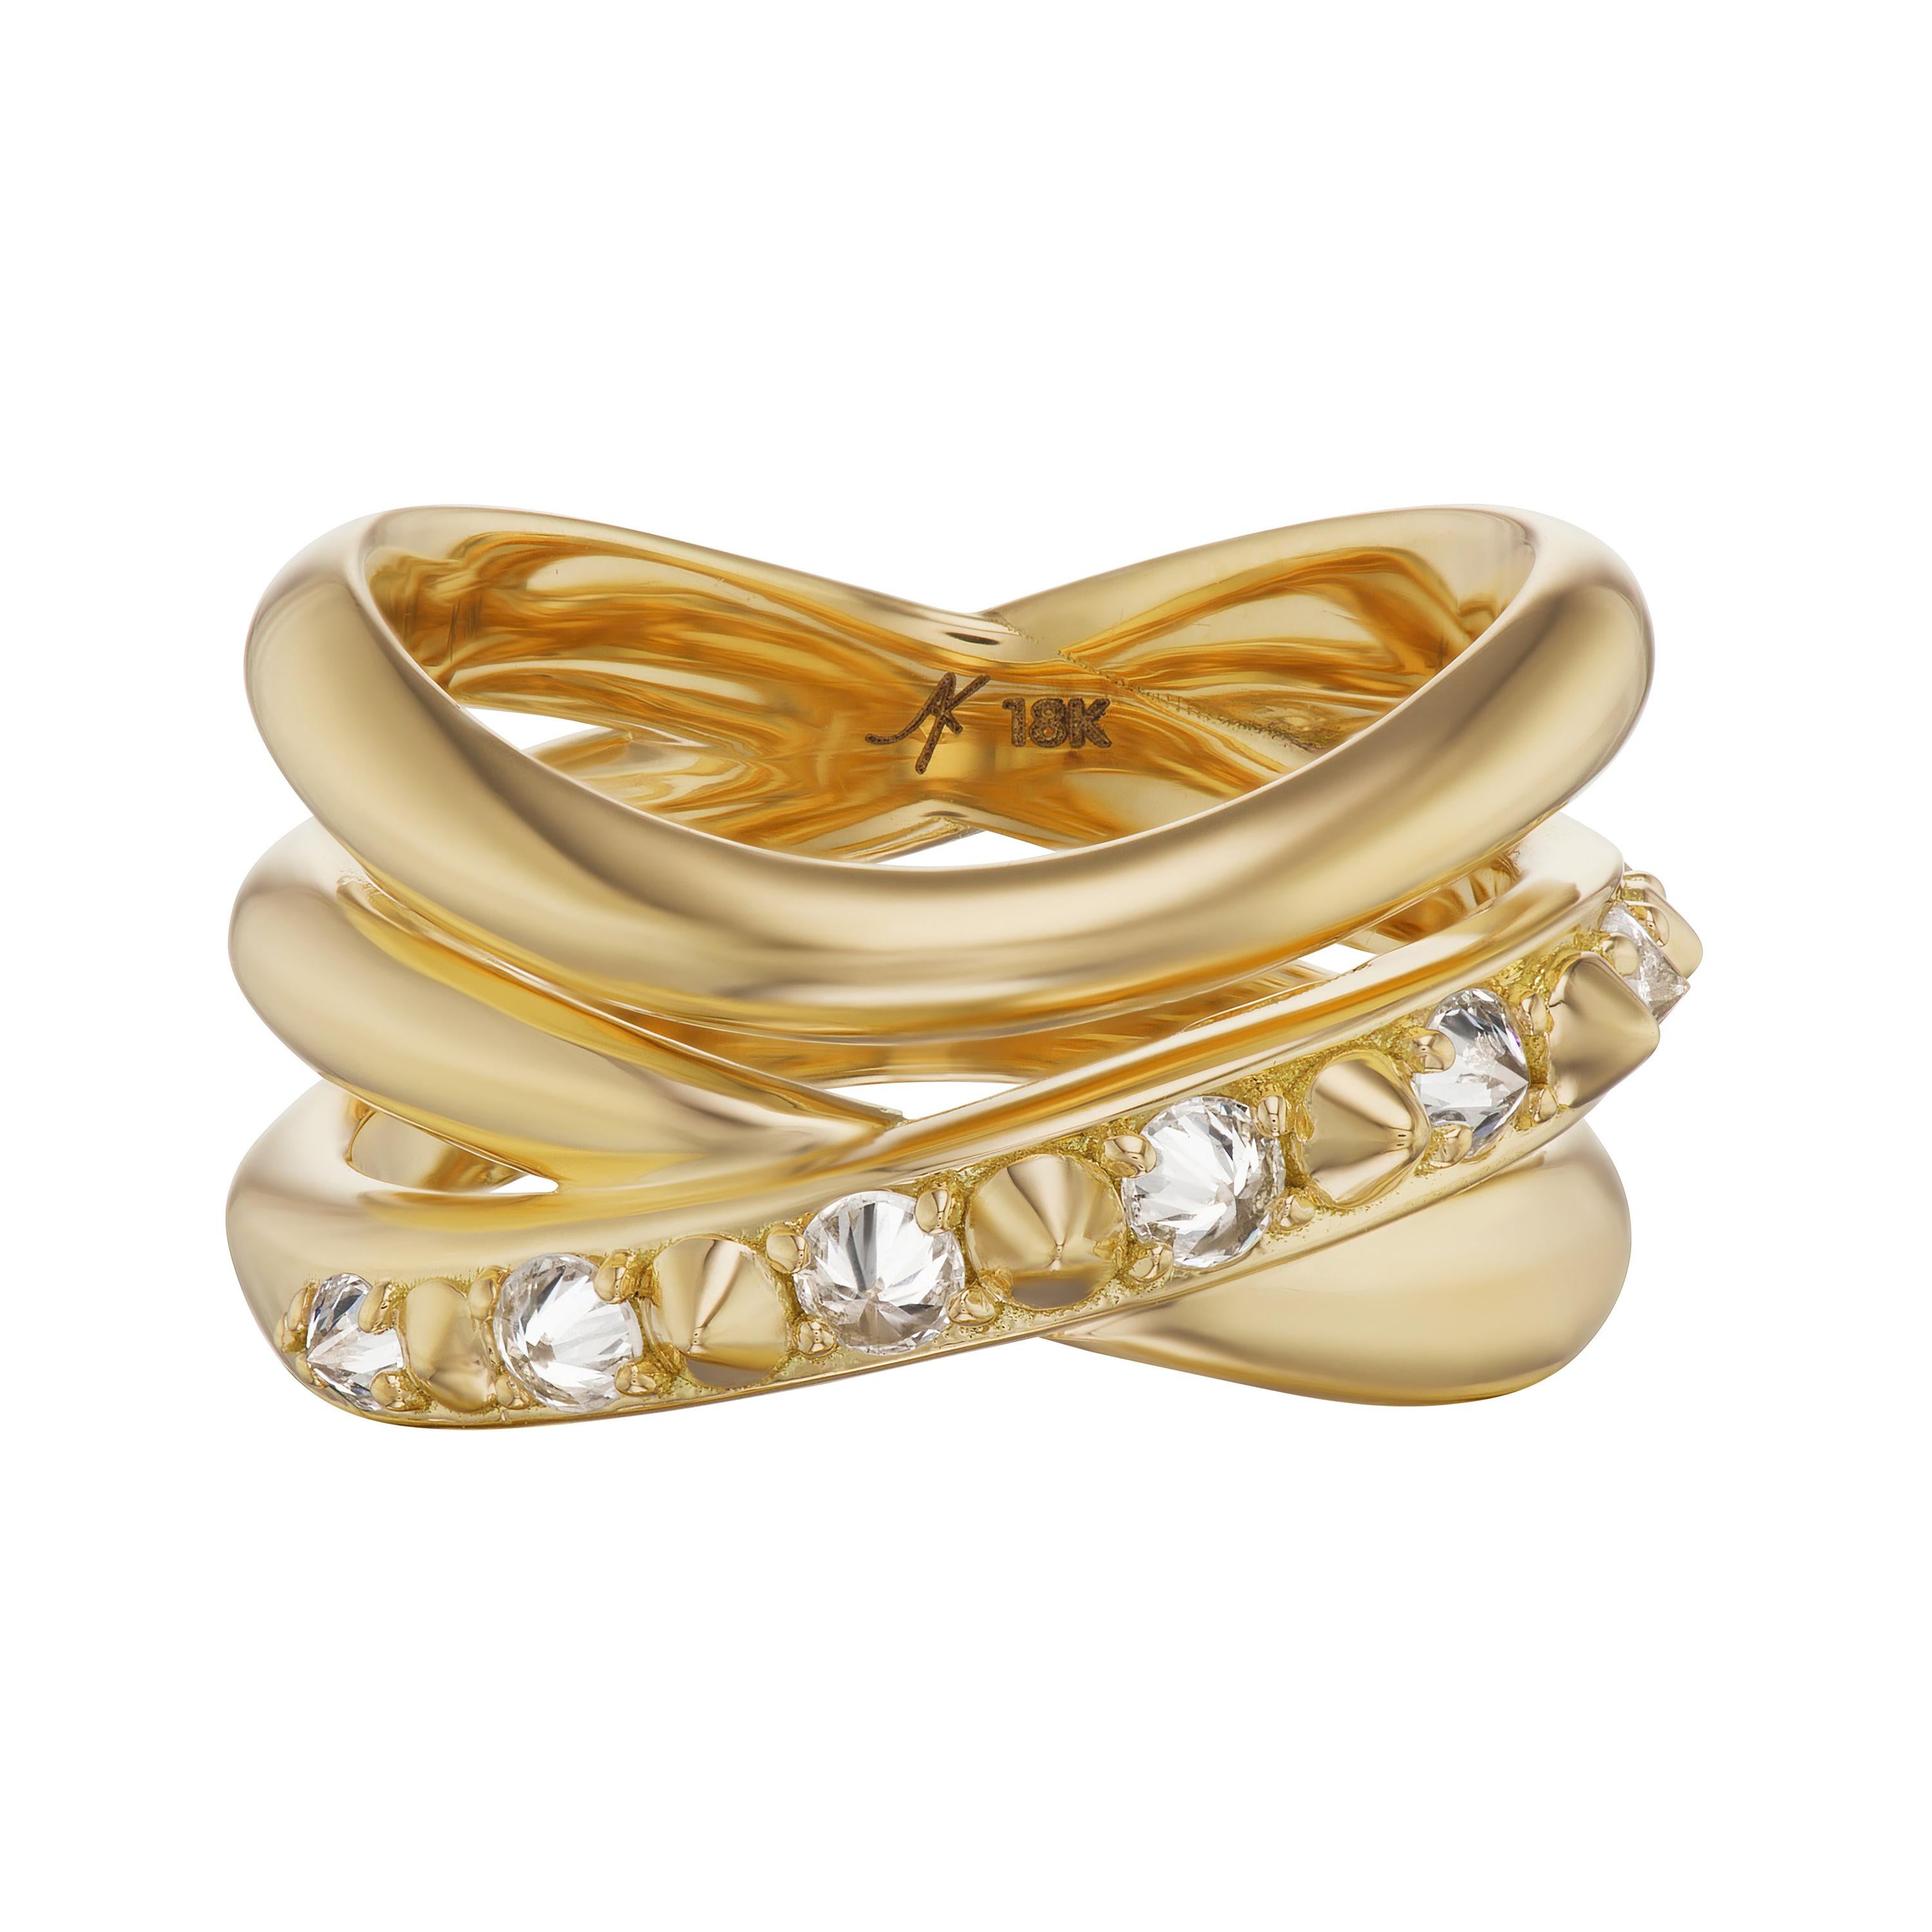 AnaKatarina 18k Gold and Inverted Diamond 'Attitude' Ring